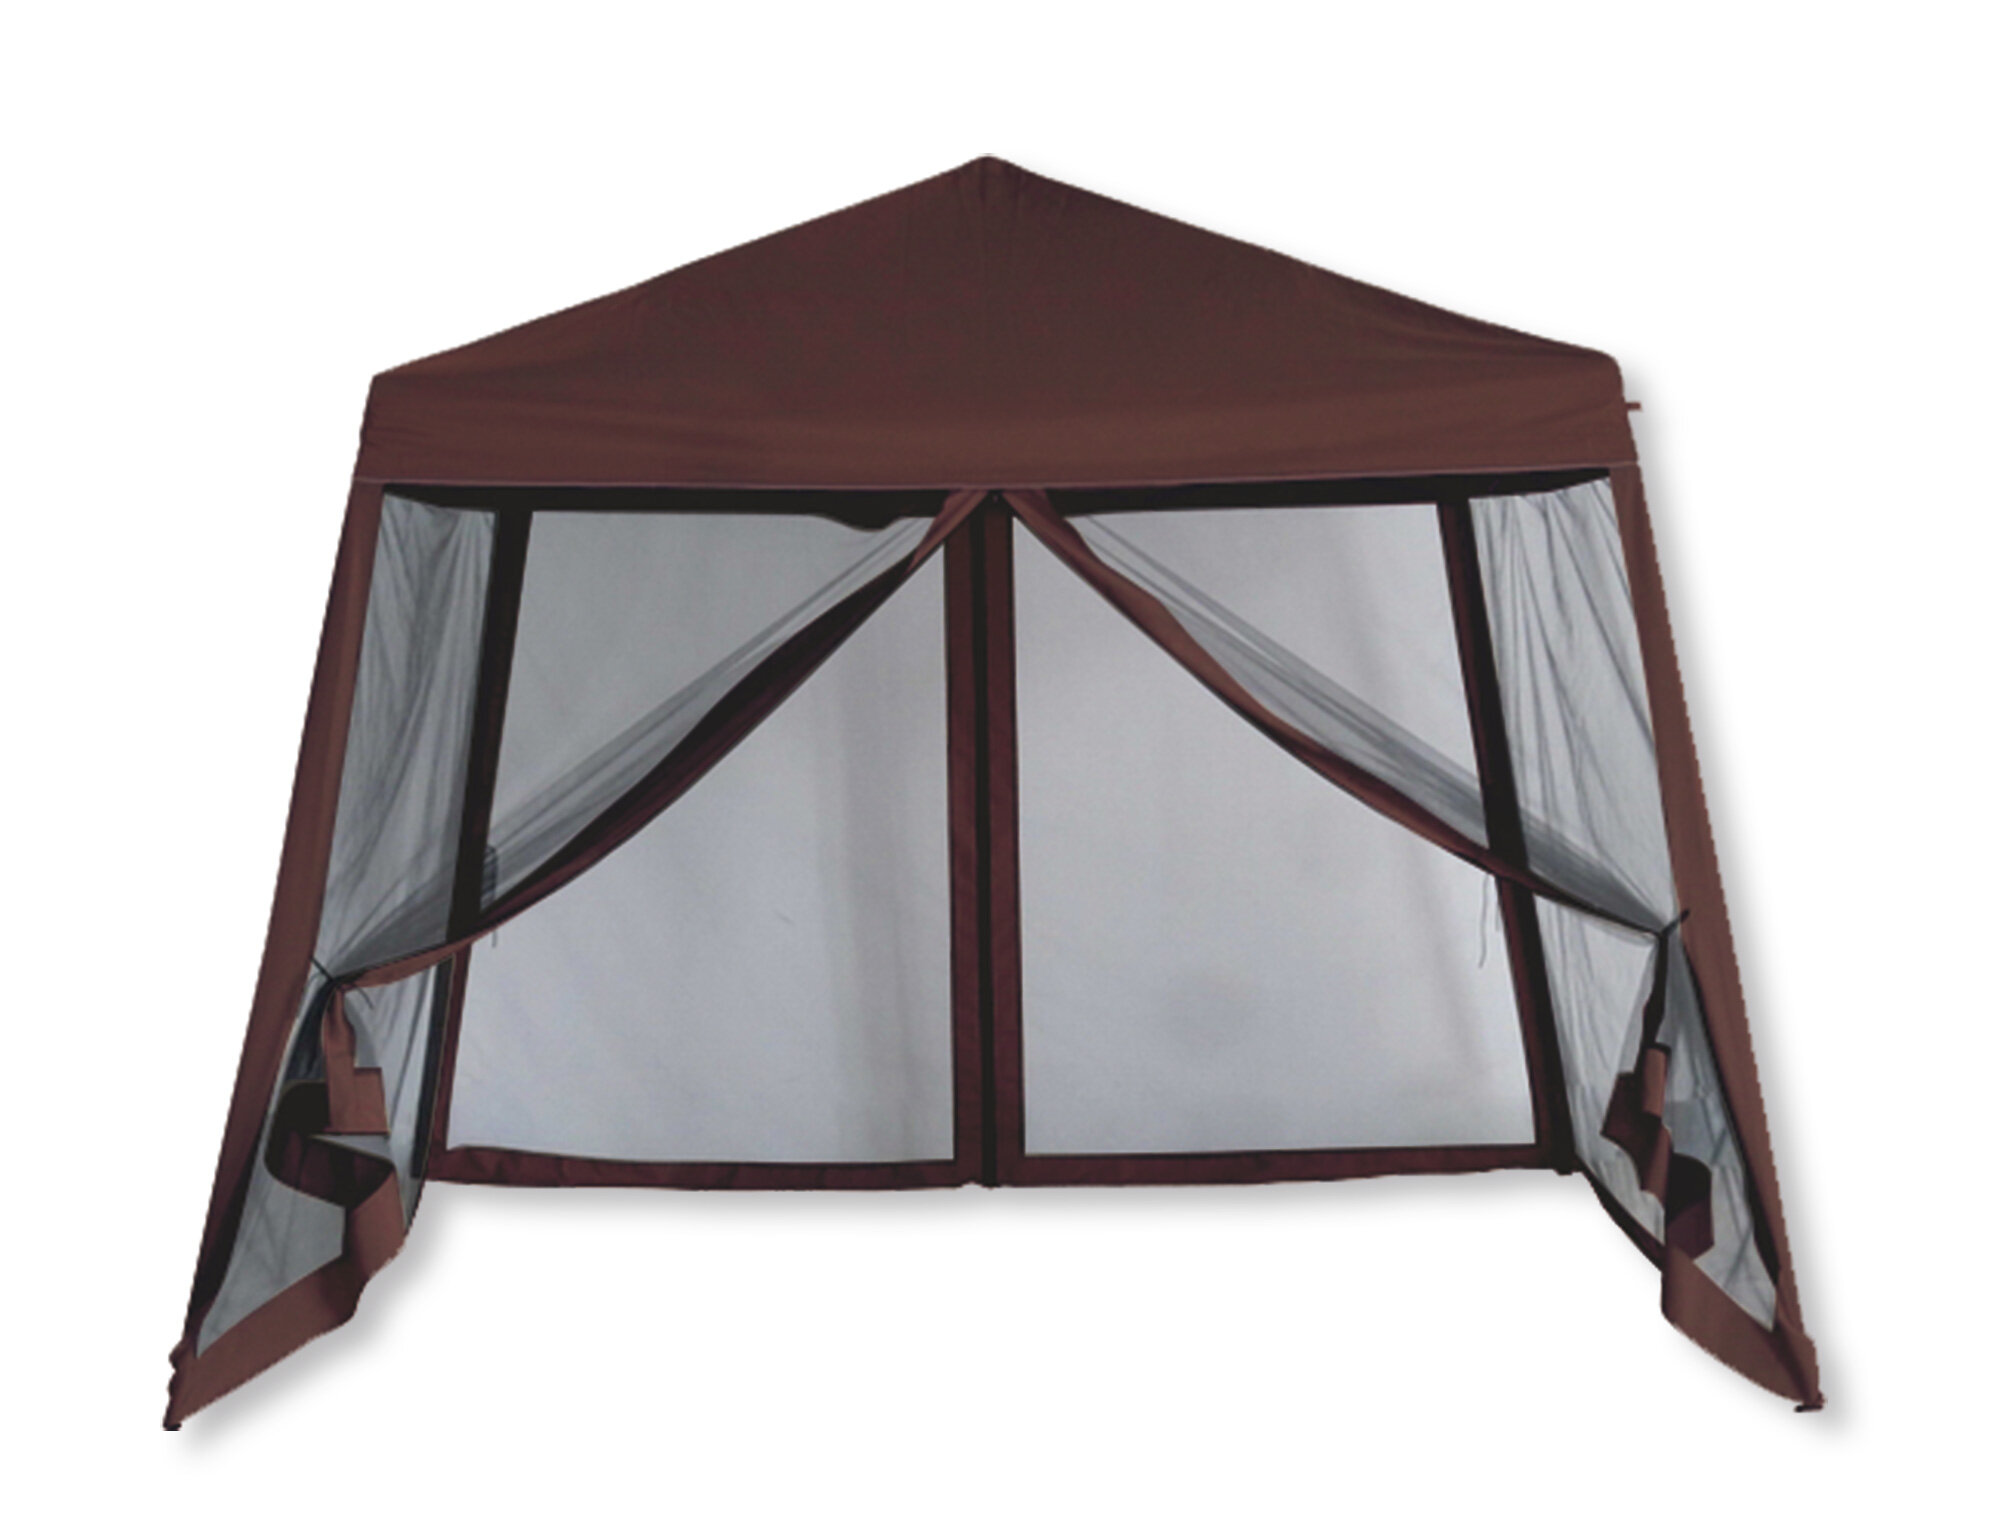 LUCKYERMORE Pop Up Canopy Tent with Mesh Side Wall 6x6x8 Height Adjustable Hexagon Outdoor Gazebos with Carry Bag for Patio Garden Backyard,Tienda emergente de Dosel 